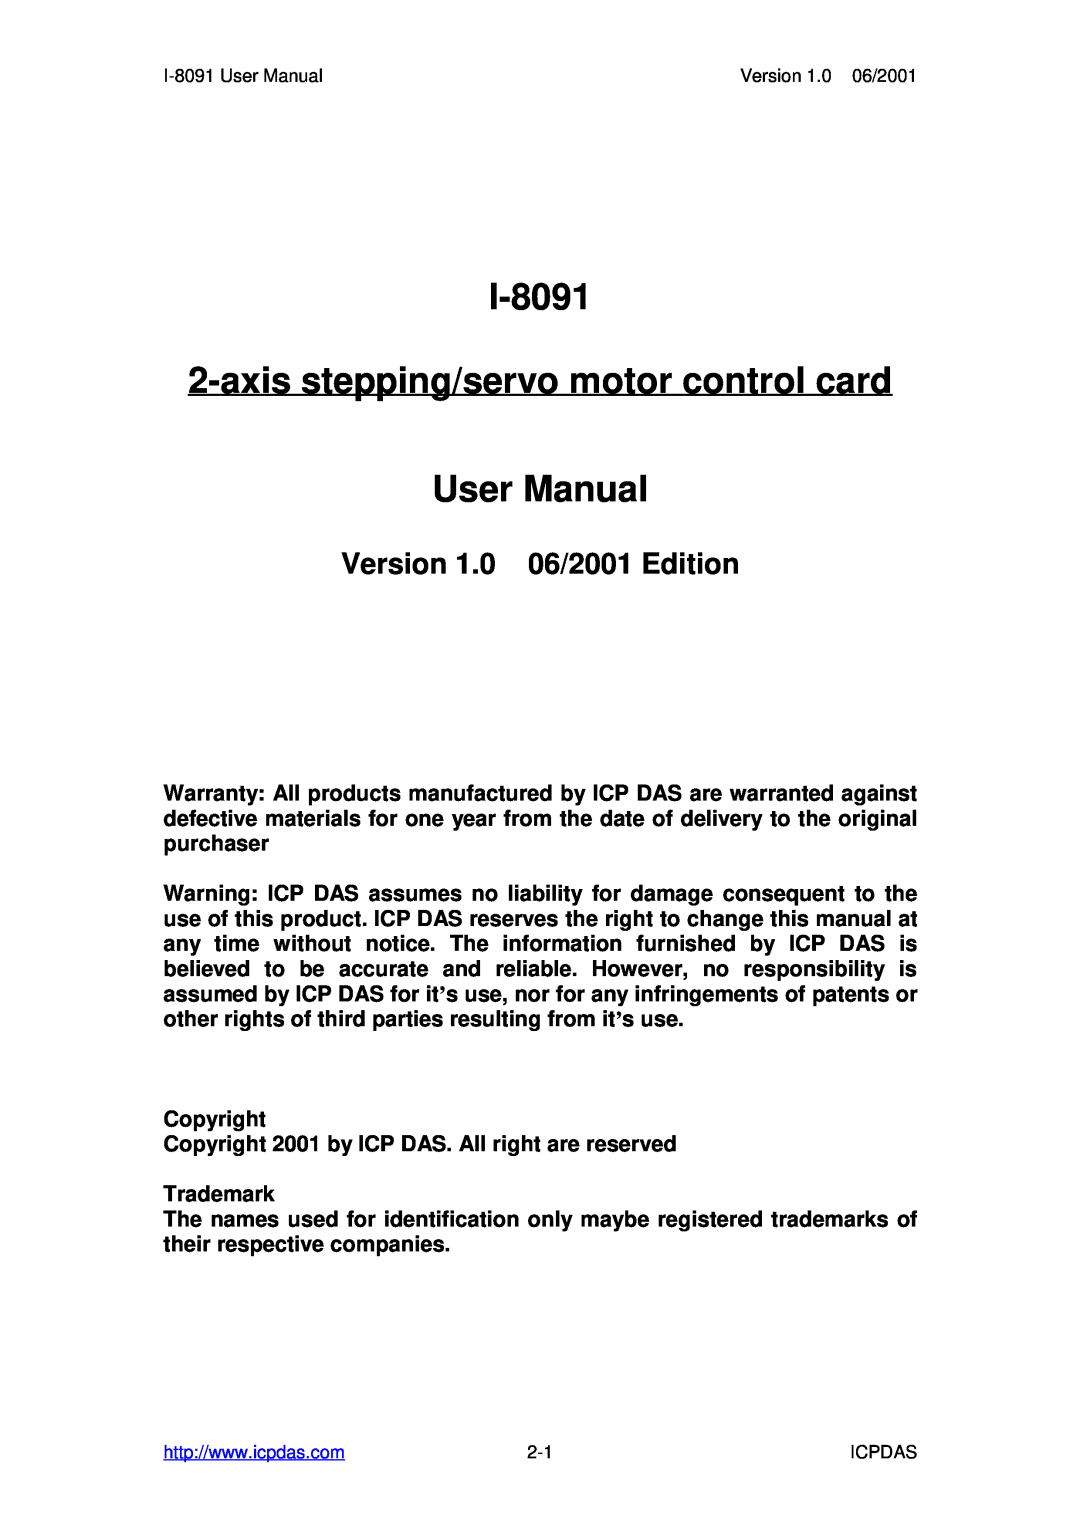 ICP DAS USA user manual I-8091 2-axis stepping/servo motor control card User Manual, Version 1.0 06/2001 Edition 